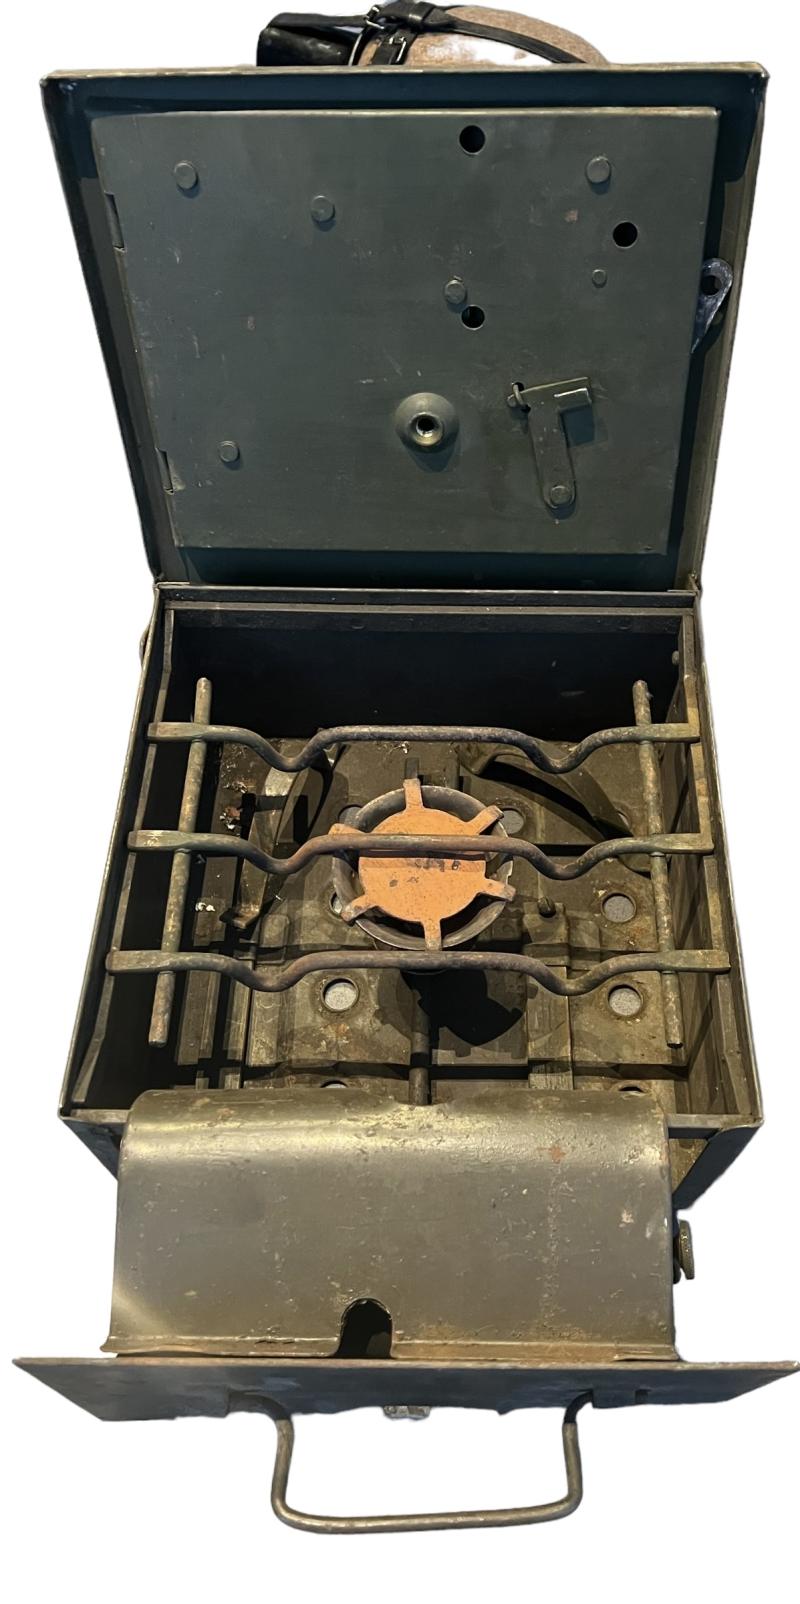 Rare British MK1 Petrol Cooker - Nice Used Condition